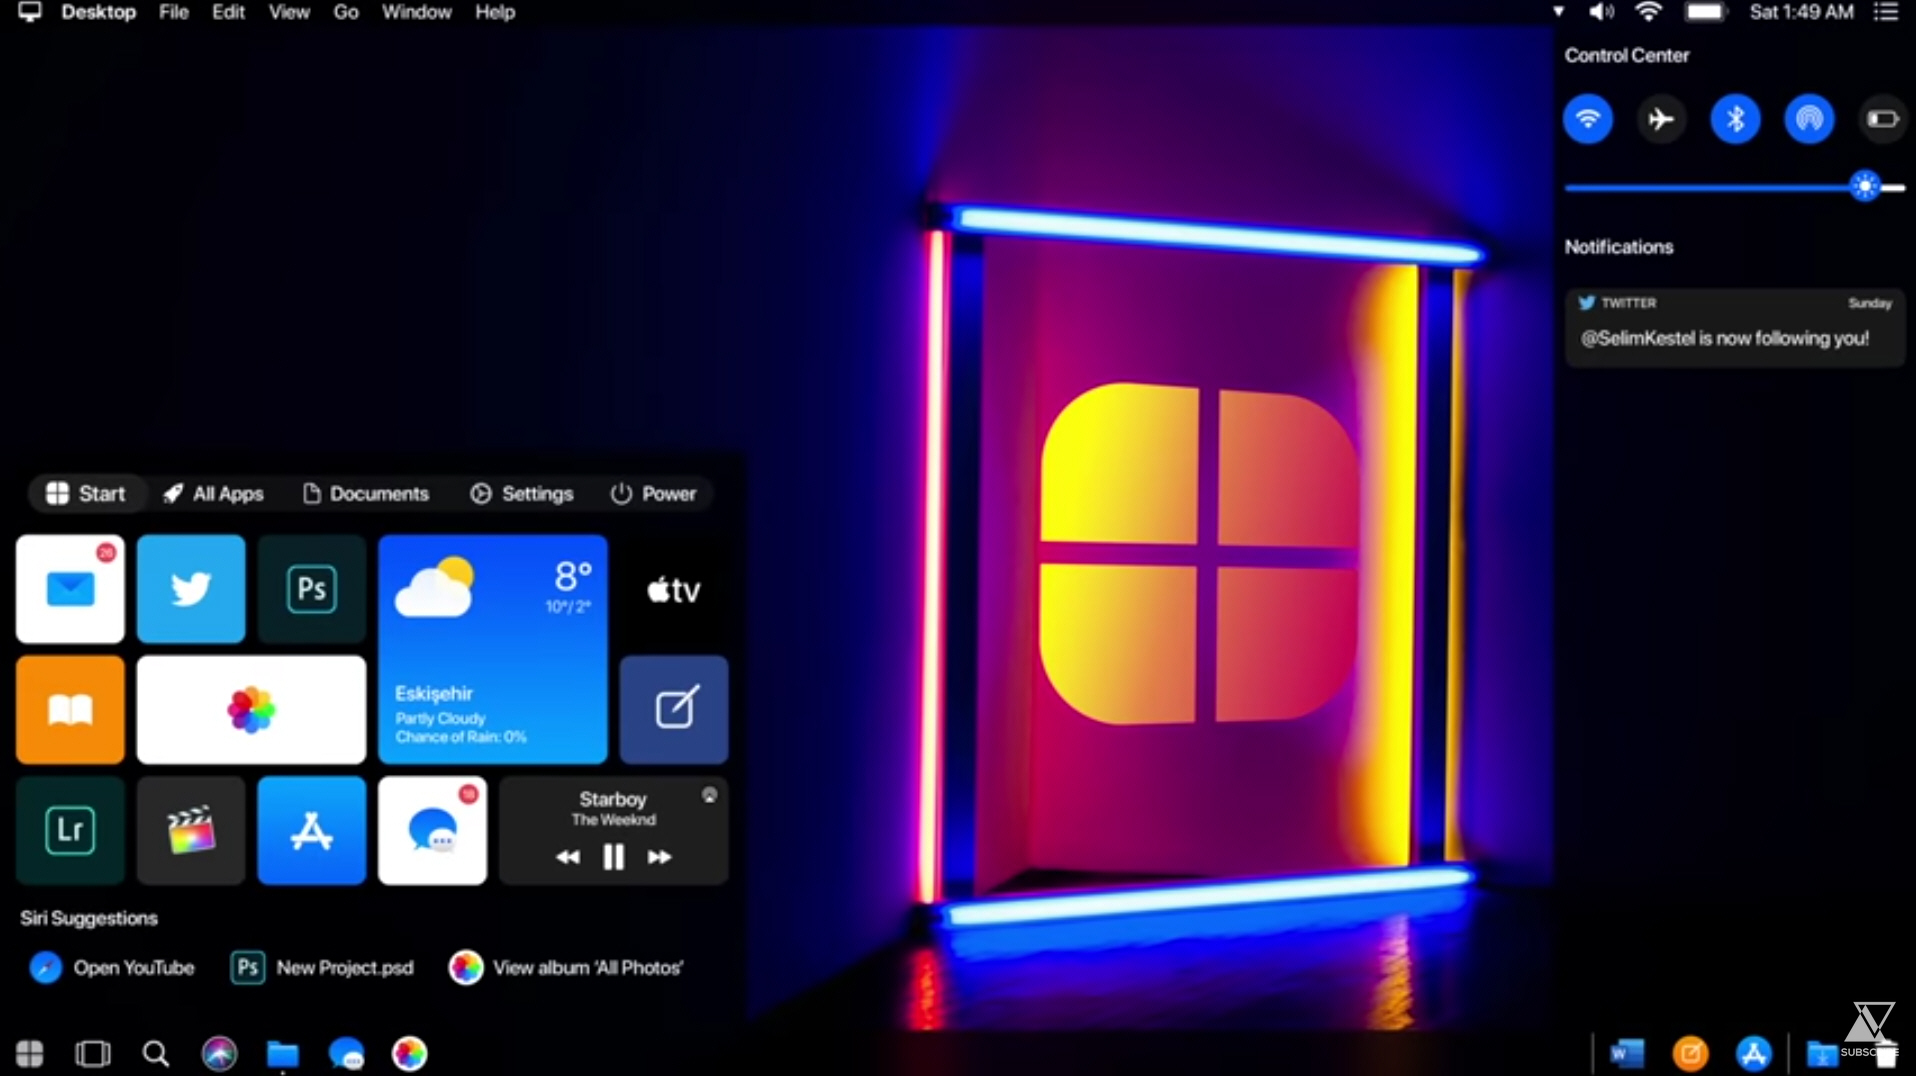 If Apple Made Windows 10 - HD Wallpaper 